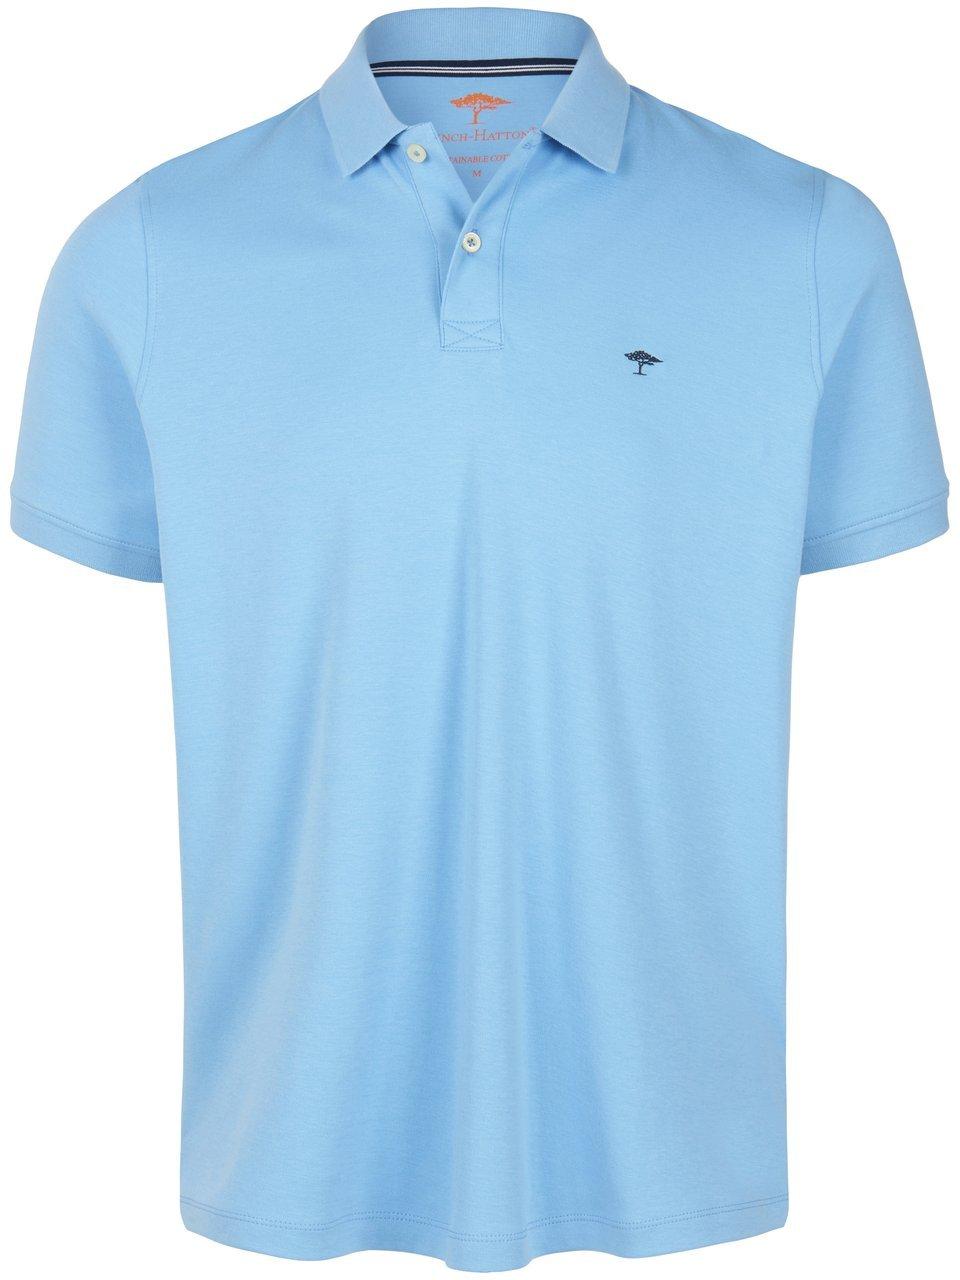 Poloshirt Van Fynch Hatton blauw